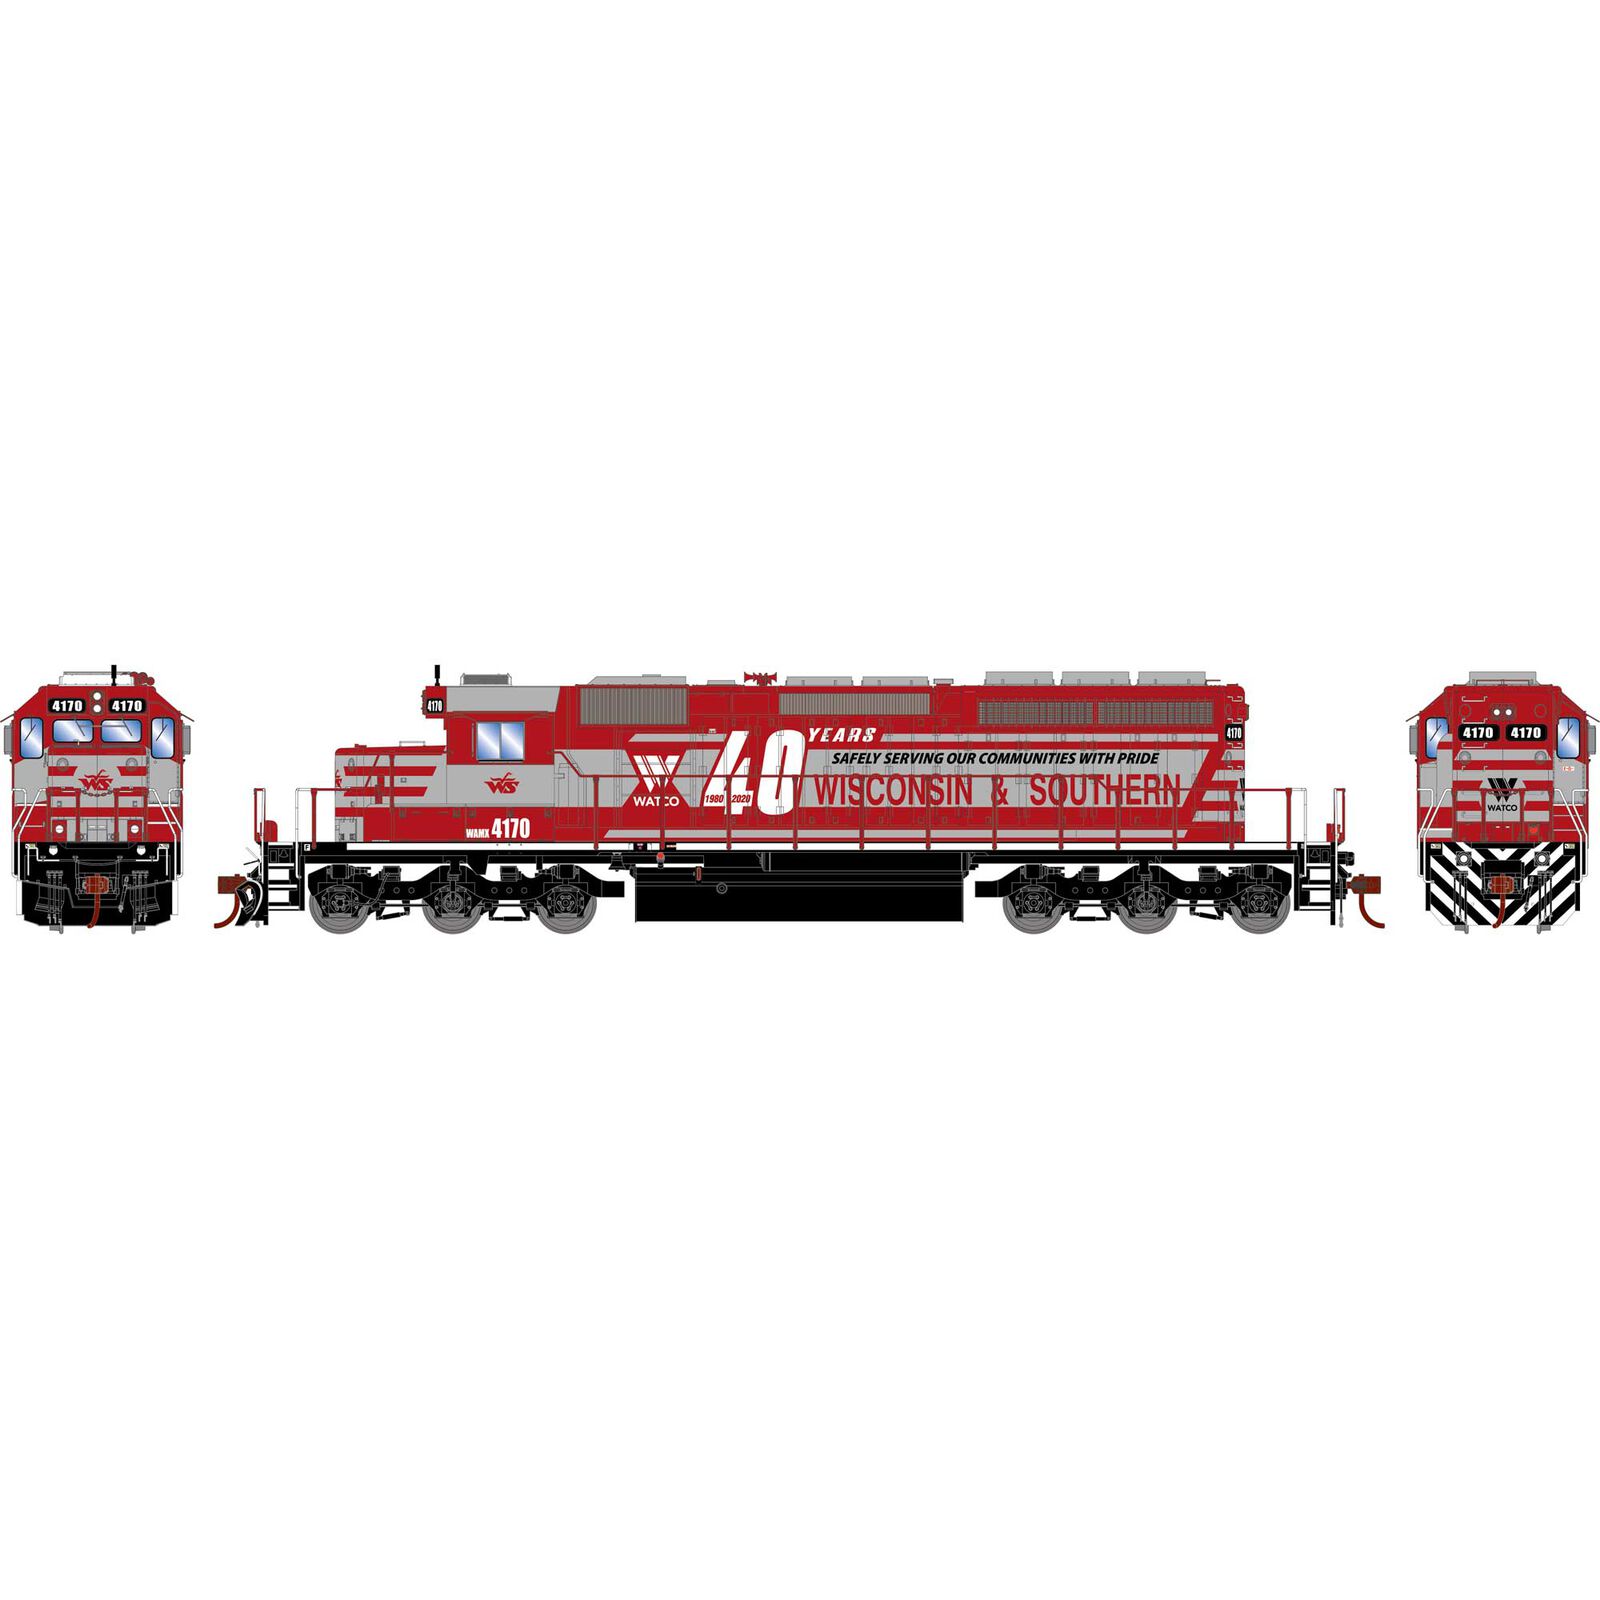 HO EMD SD40-2 Locomotive with DCC & Sound, WAMX #4170